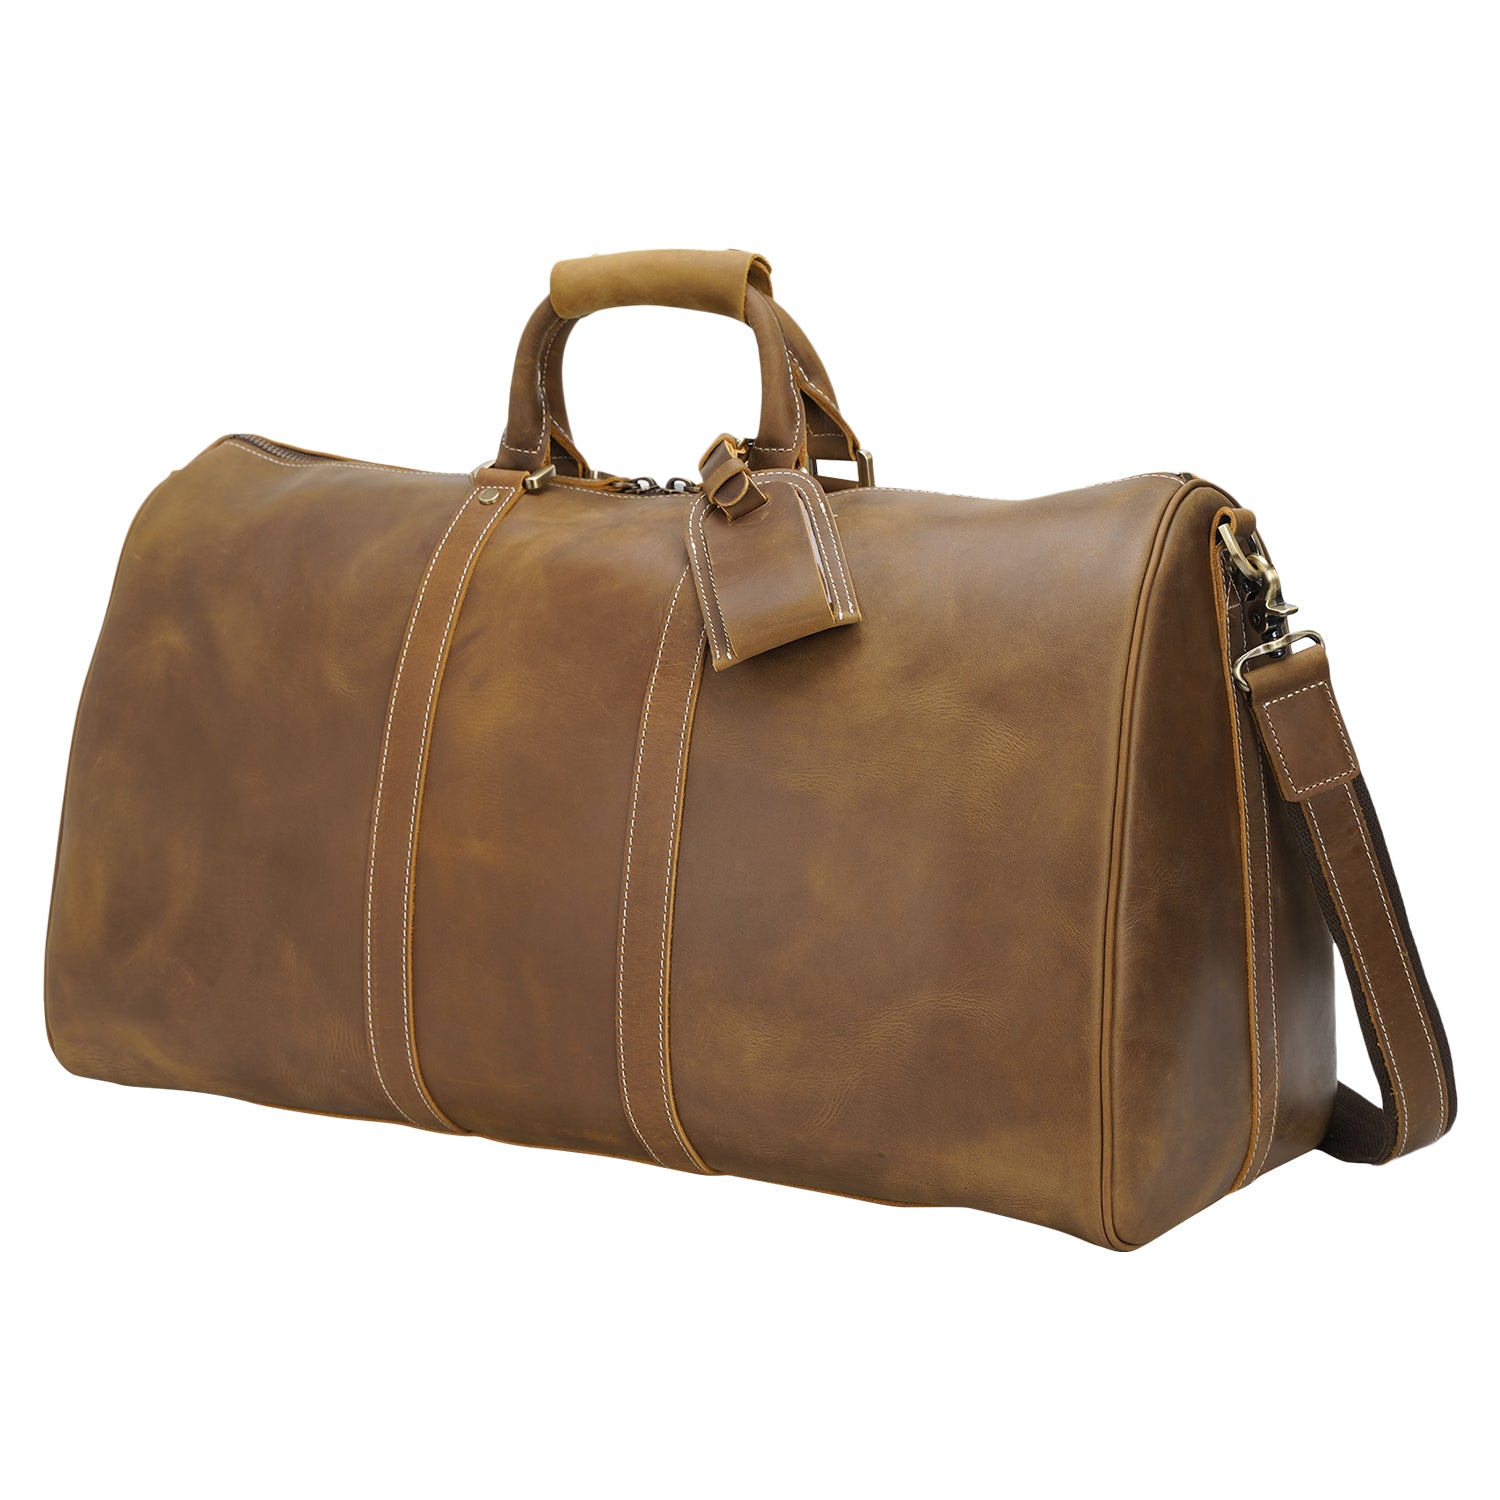 Polare 23" Ambassador Style Retro Weekender Bag (Light Brown)